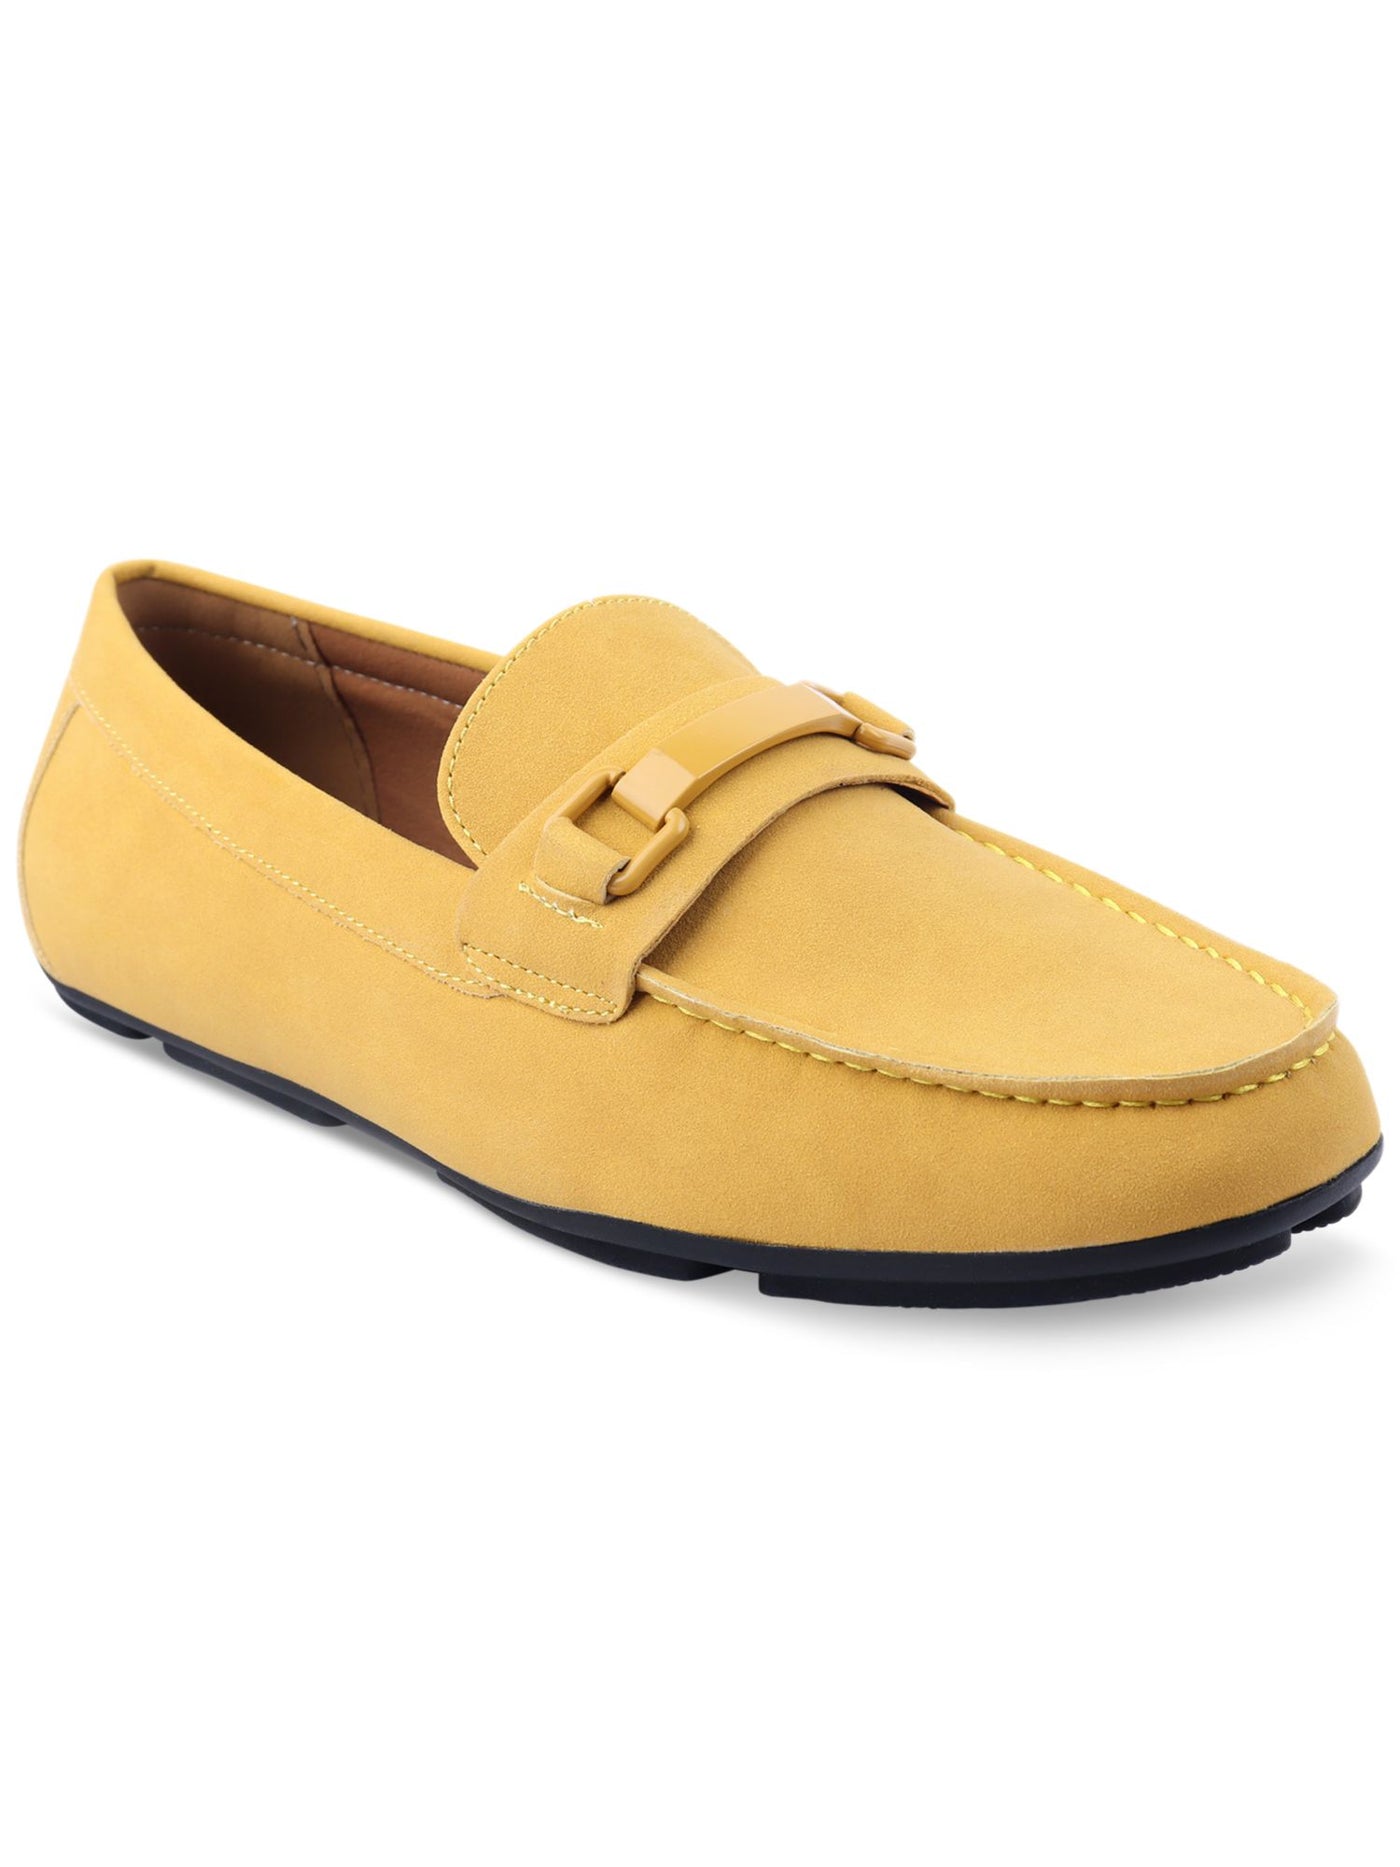 ALFANI Mens Yellow Cushioned Egan Round Toe Slip On Loafers Shoes 10 M